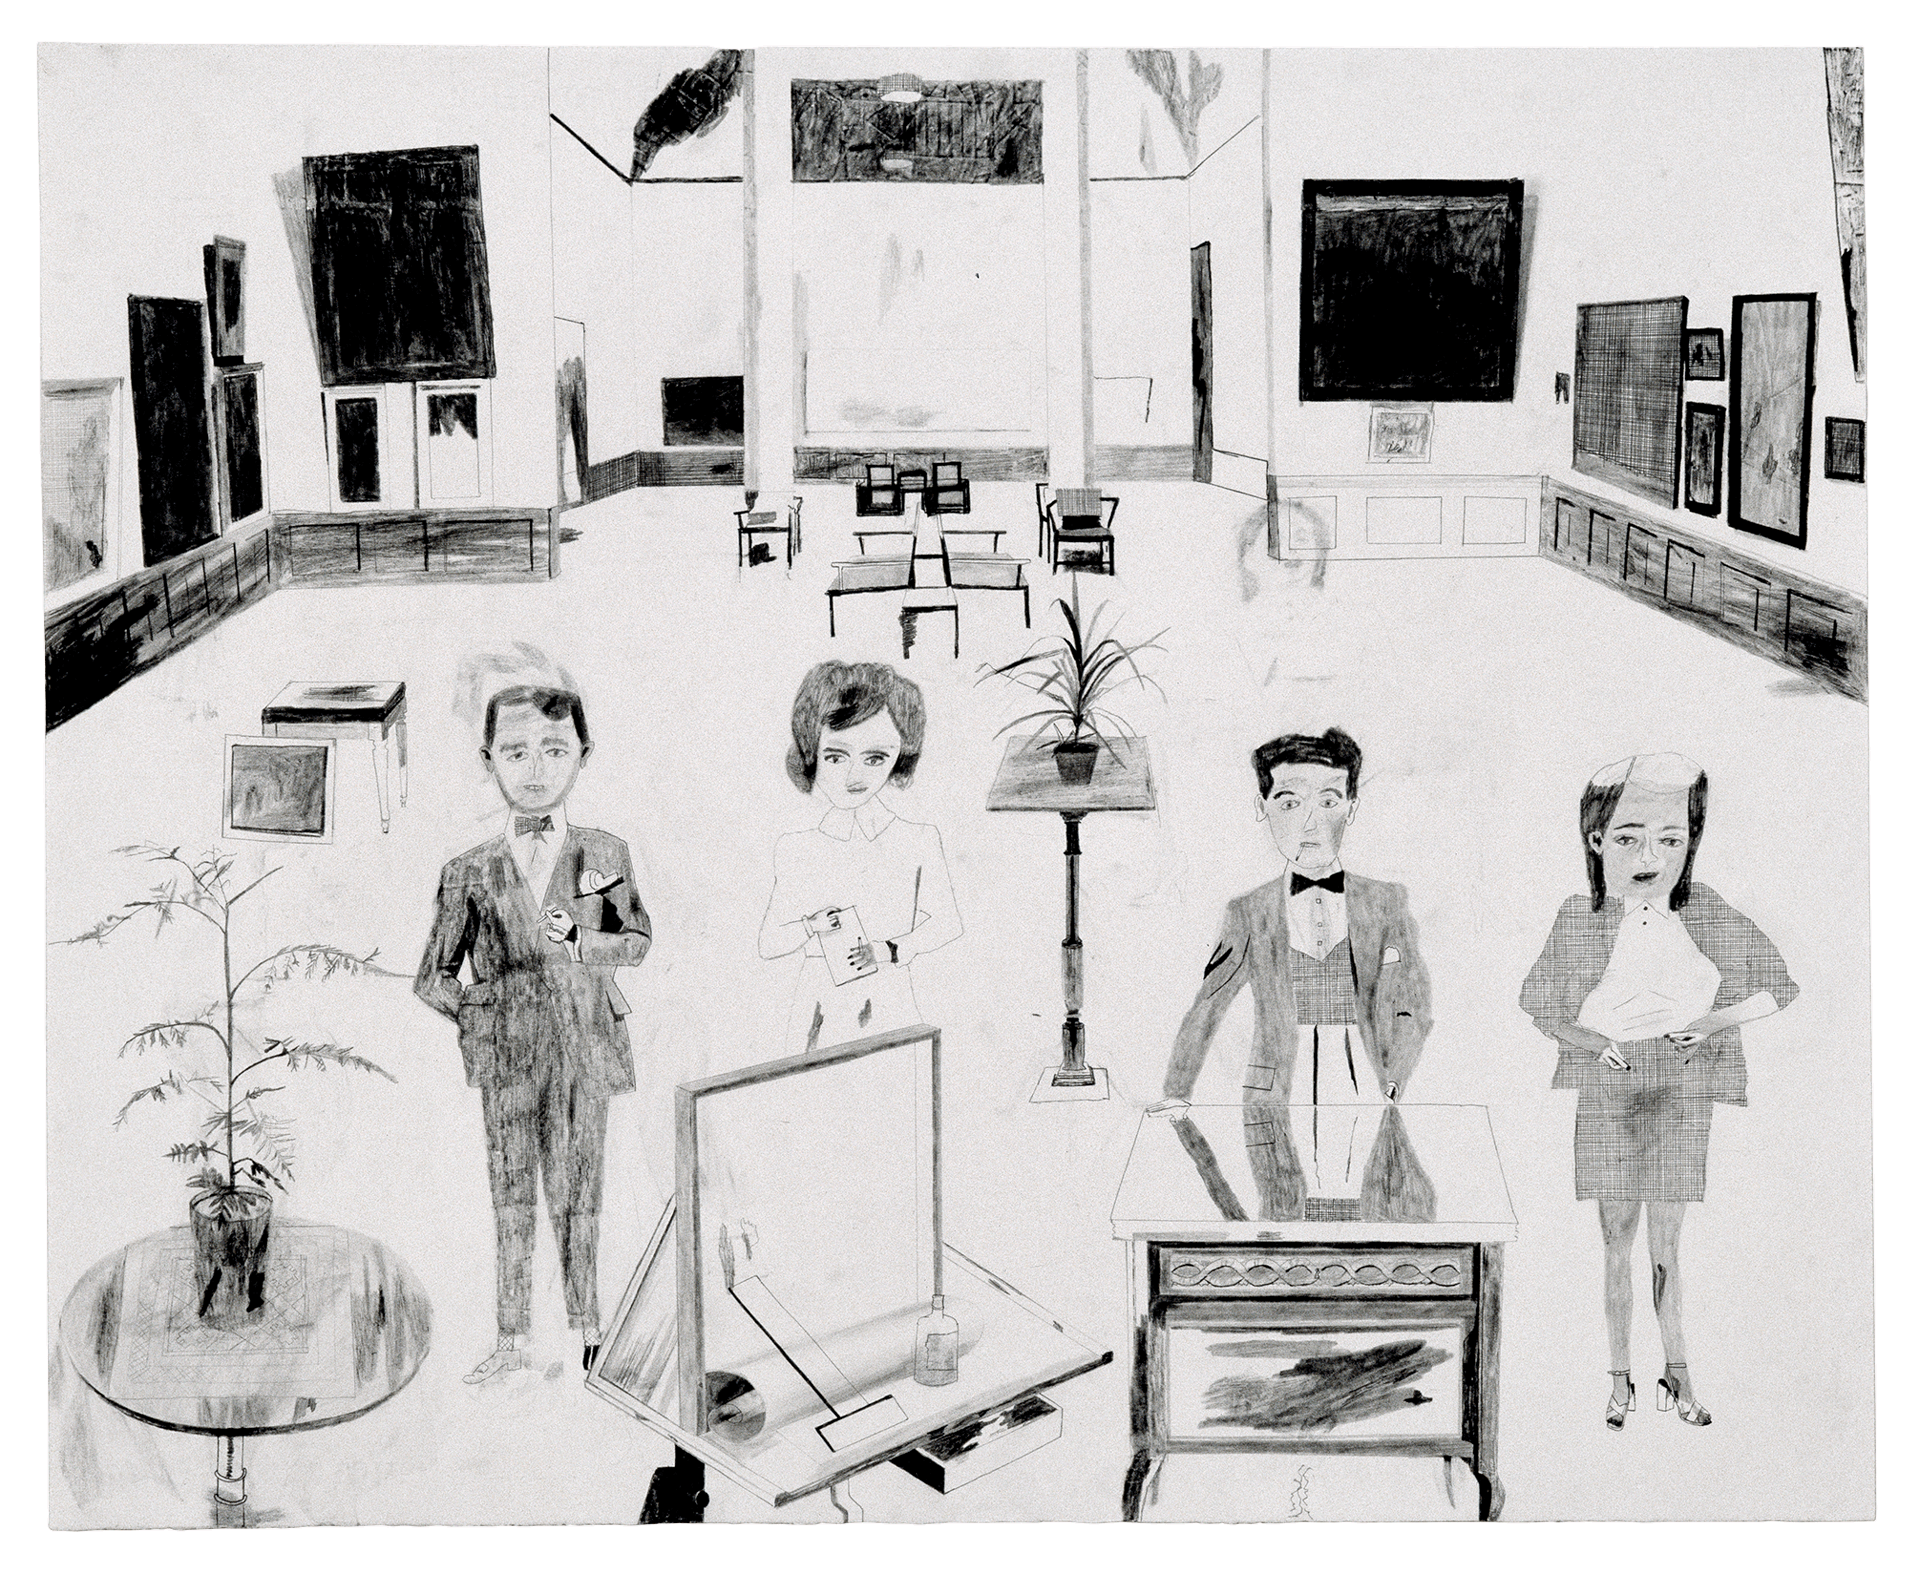 A work on paper by Jockum Nordstr√∂m, titled Back at Work, dated 2003